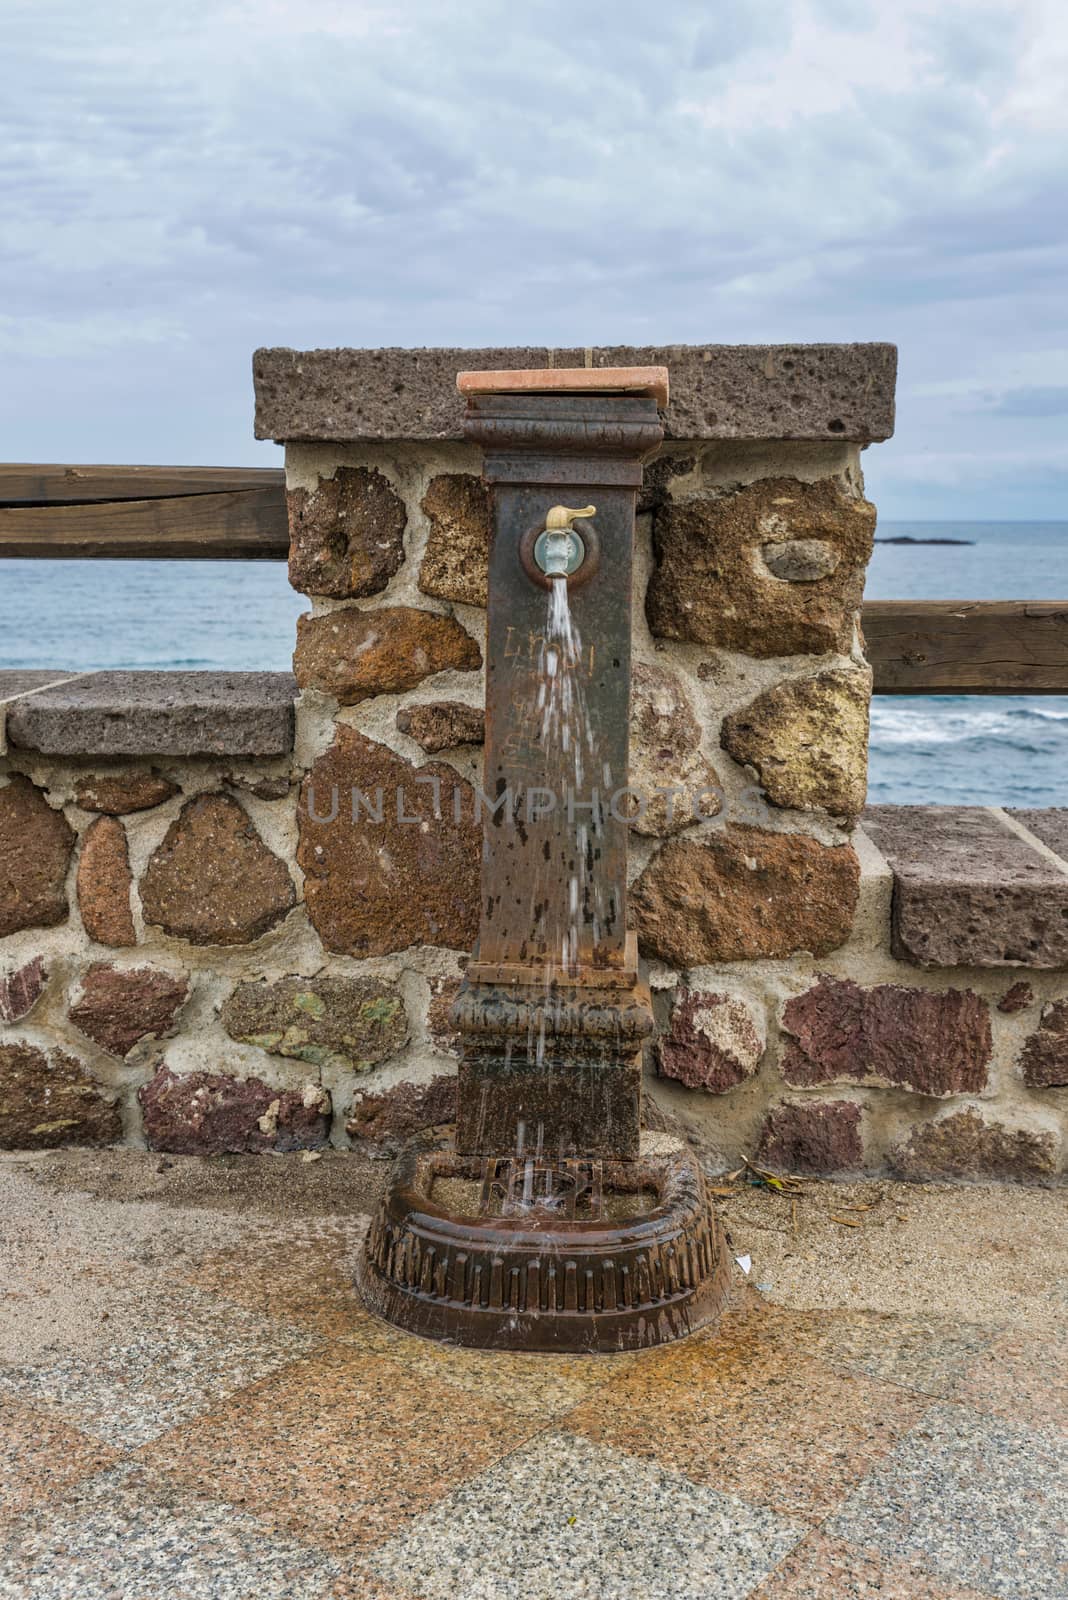 public tap with drinking water in castelsardo on the italian island of sardinia